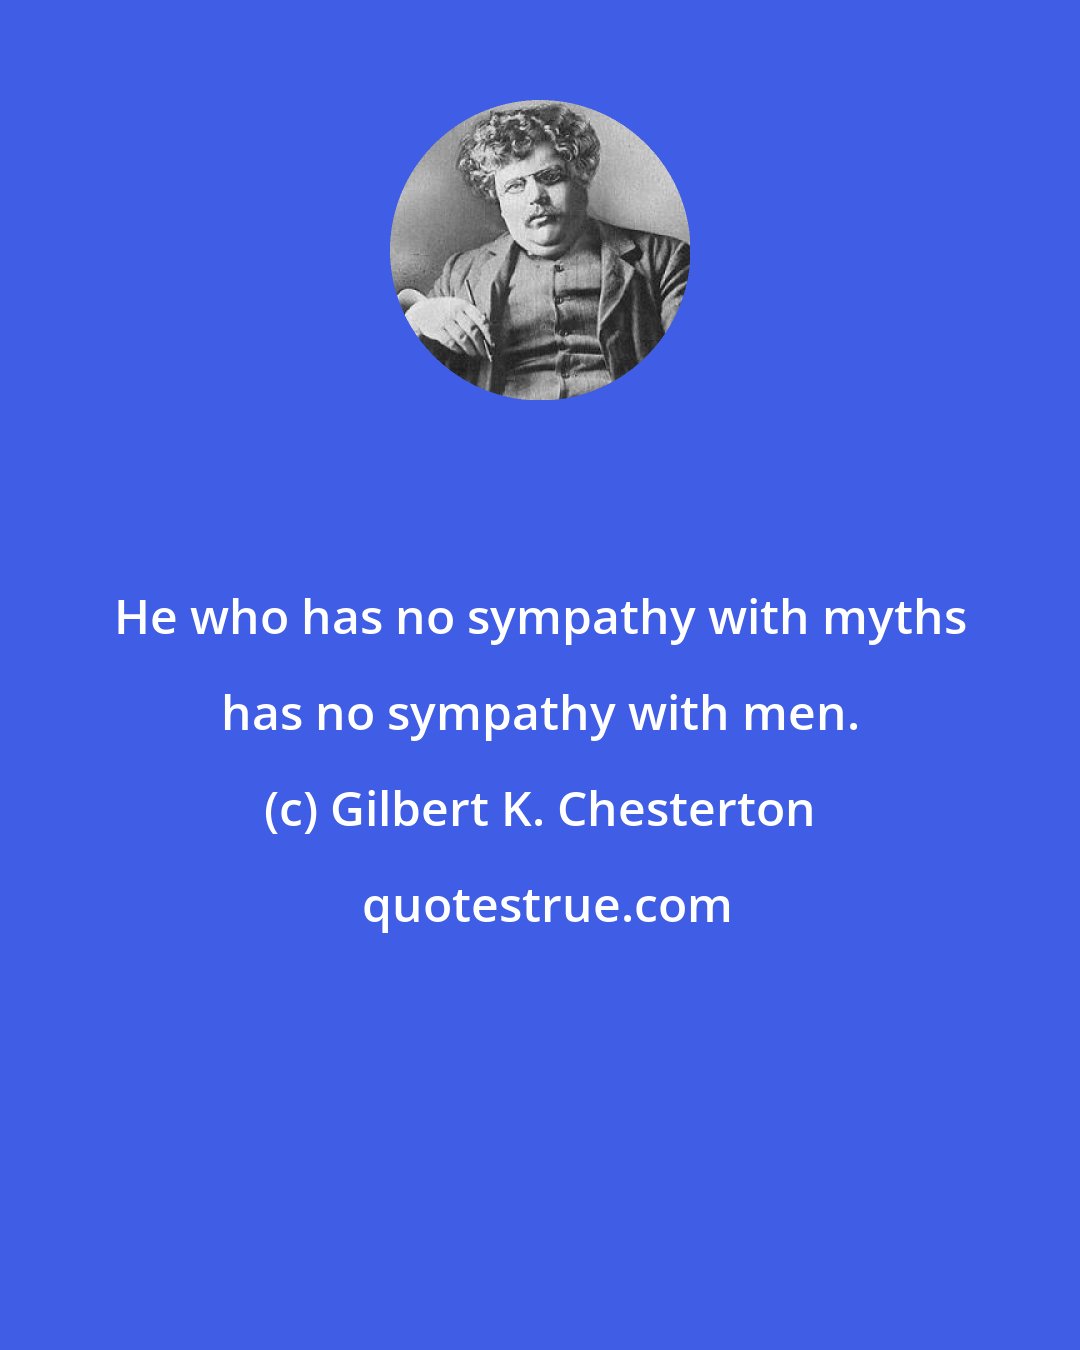 Gilbert K. Chesterton: He who has no sympathy with myths has no sympathy with men.